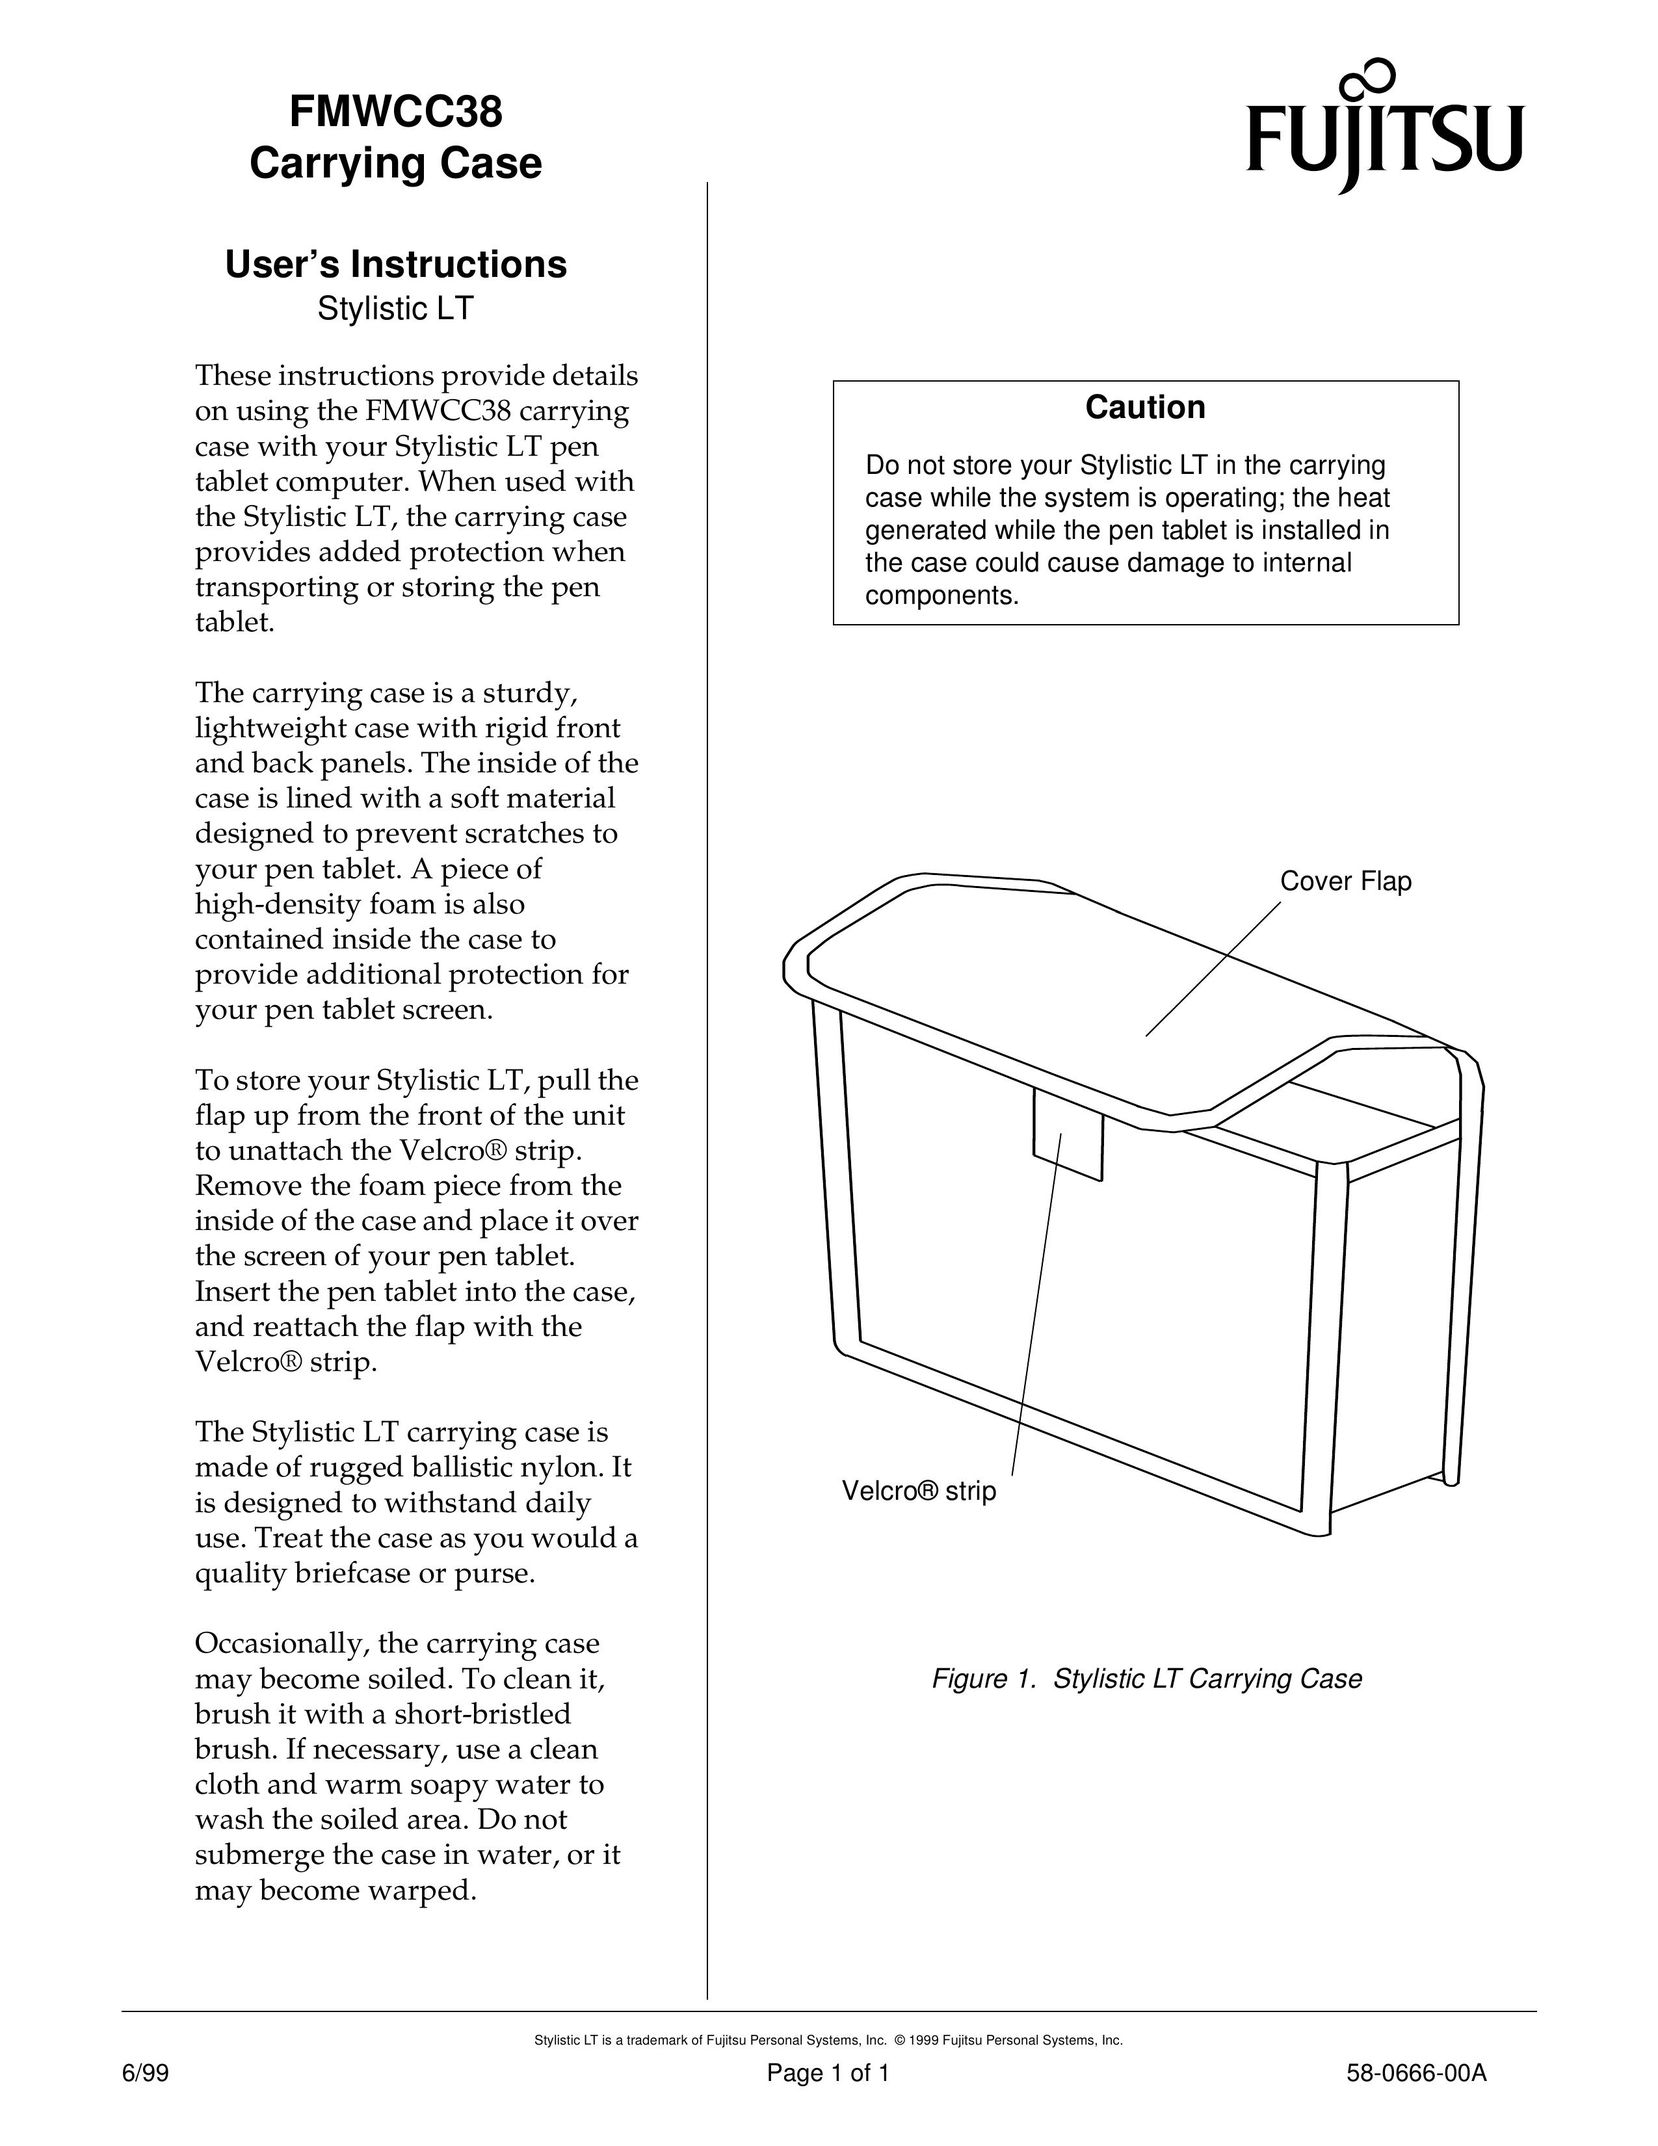 Fujitsu FMWCC38 Carrying Case User Manual